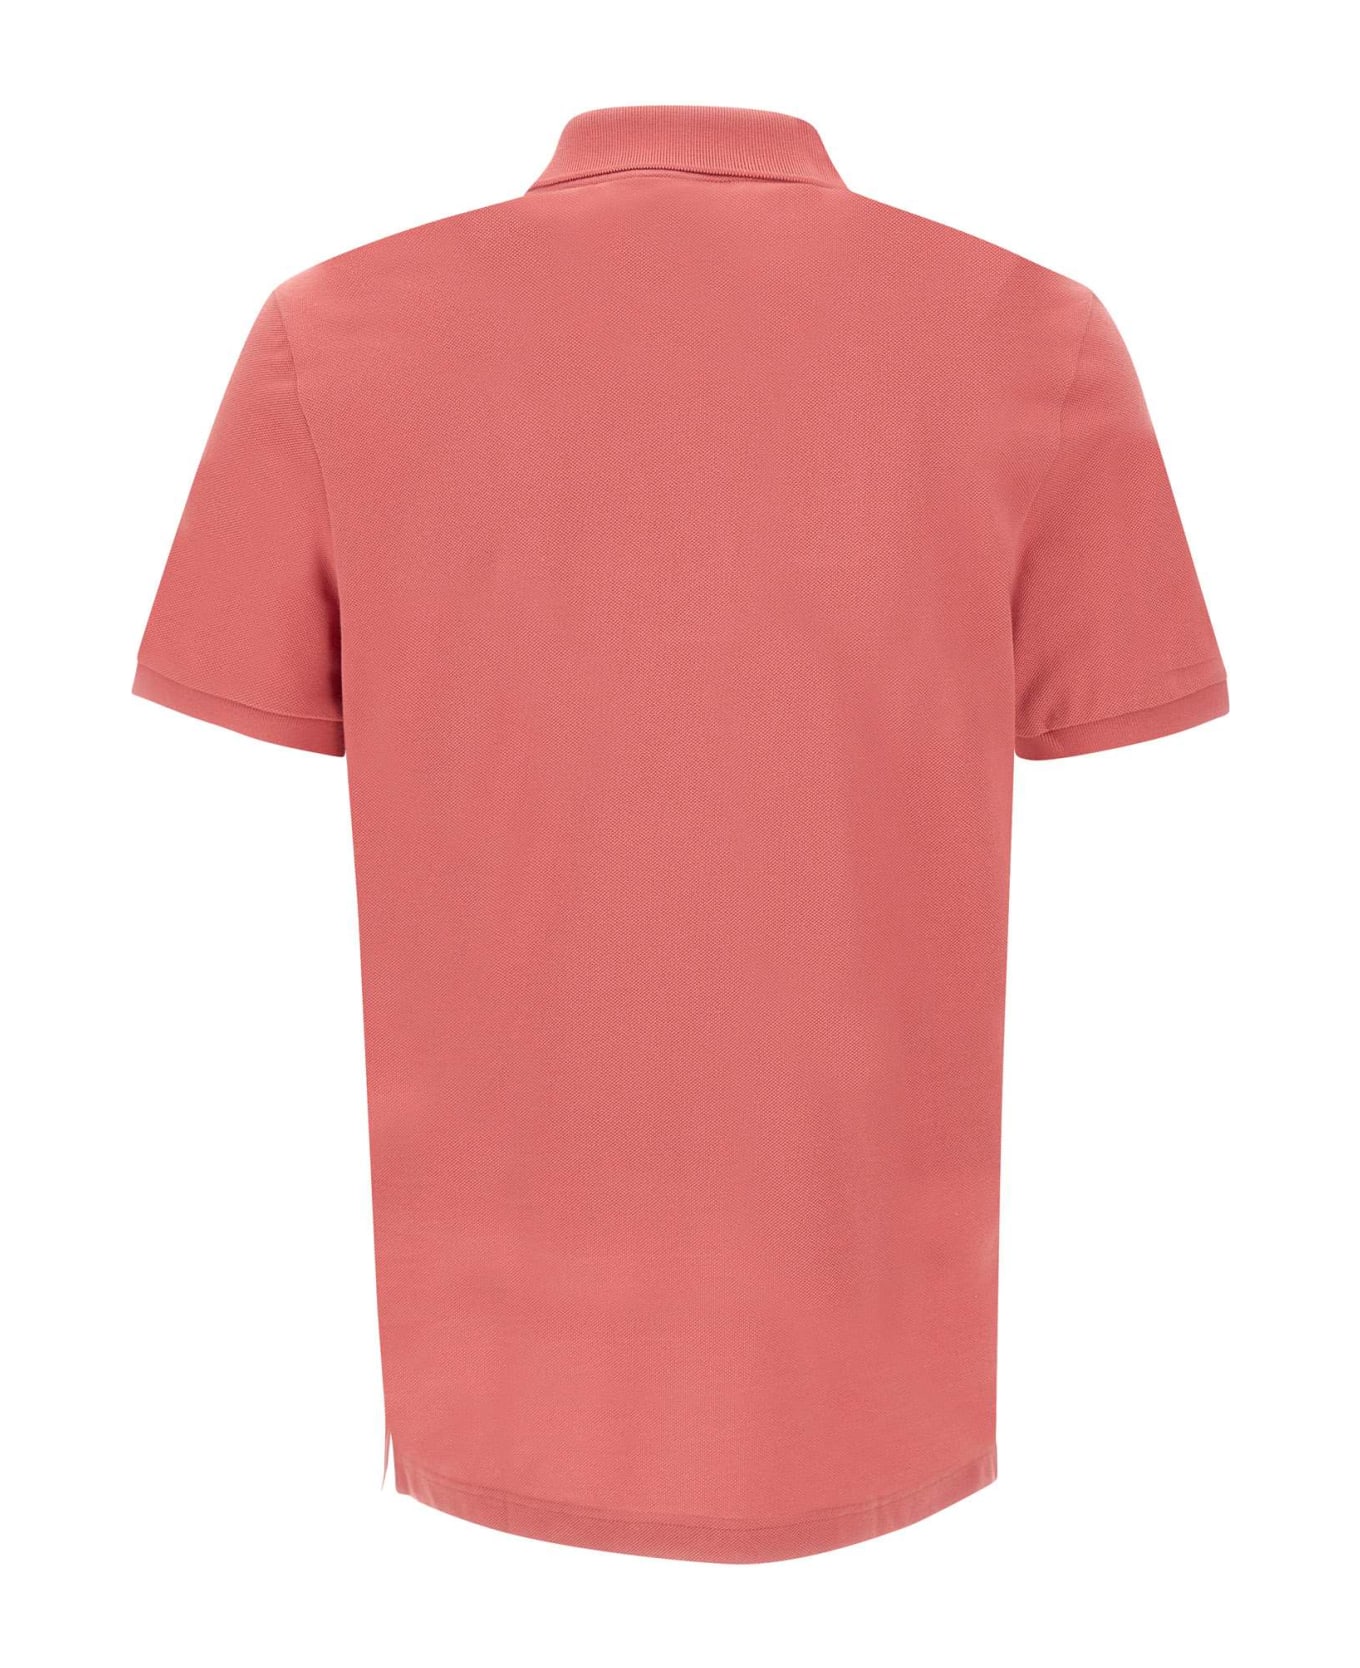 Lacoste Cotton Piquet Polo Shirt - ORANGE